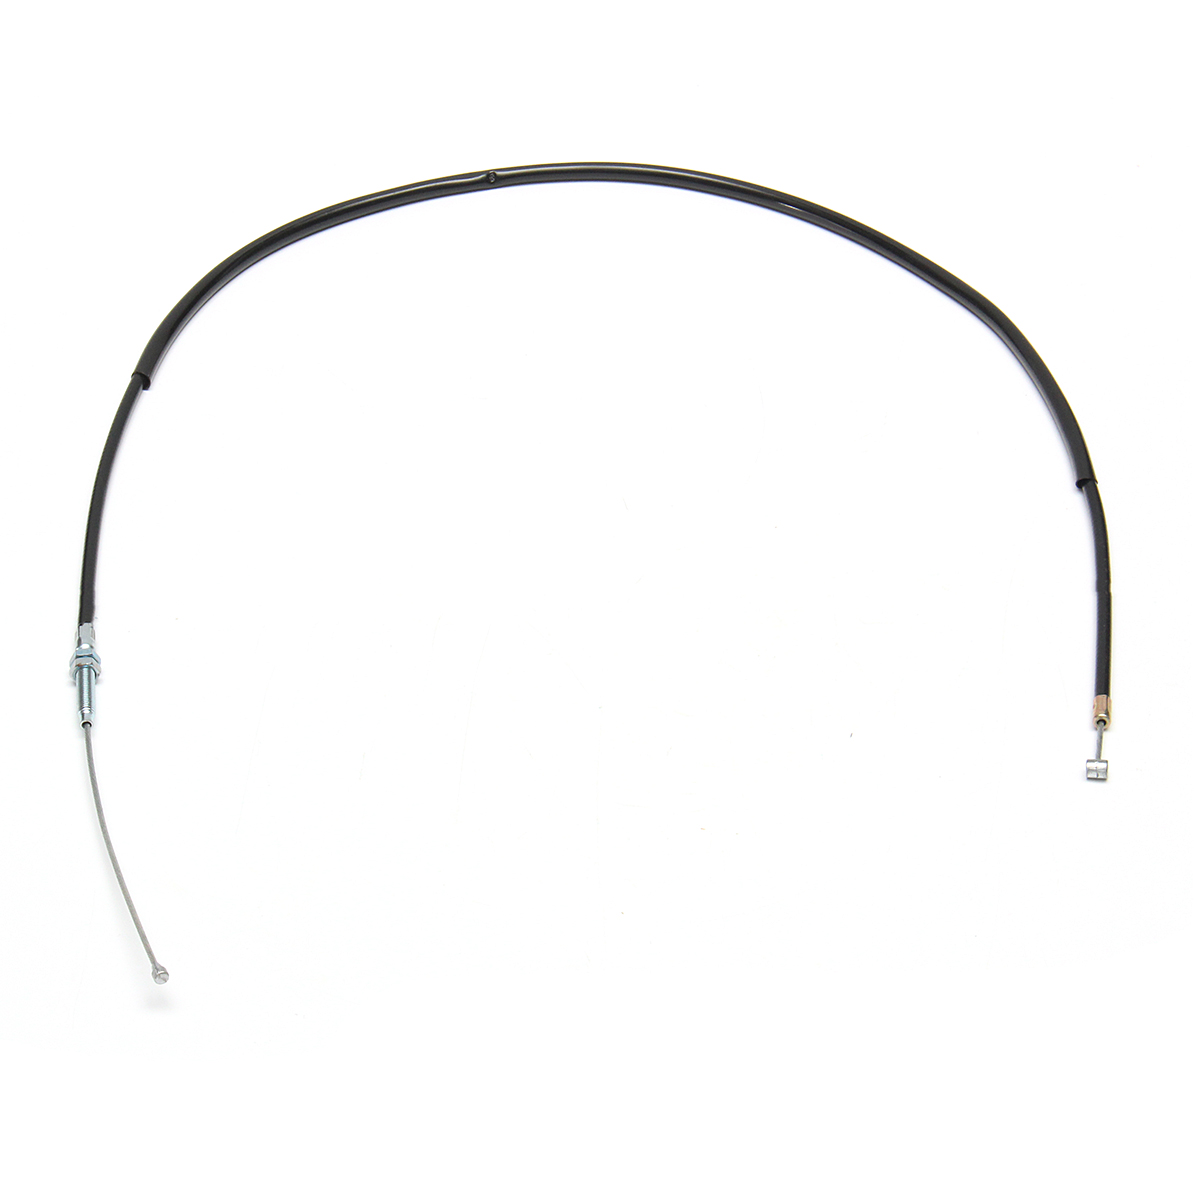 Motion Pro Handle Clutch Cable for Honda Trx300Ex 1993-2008 300Ex 02-0108